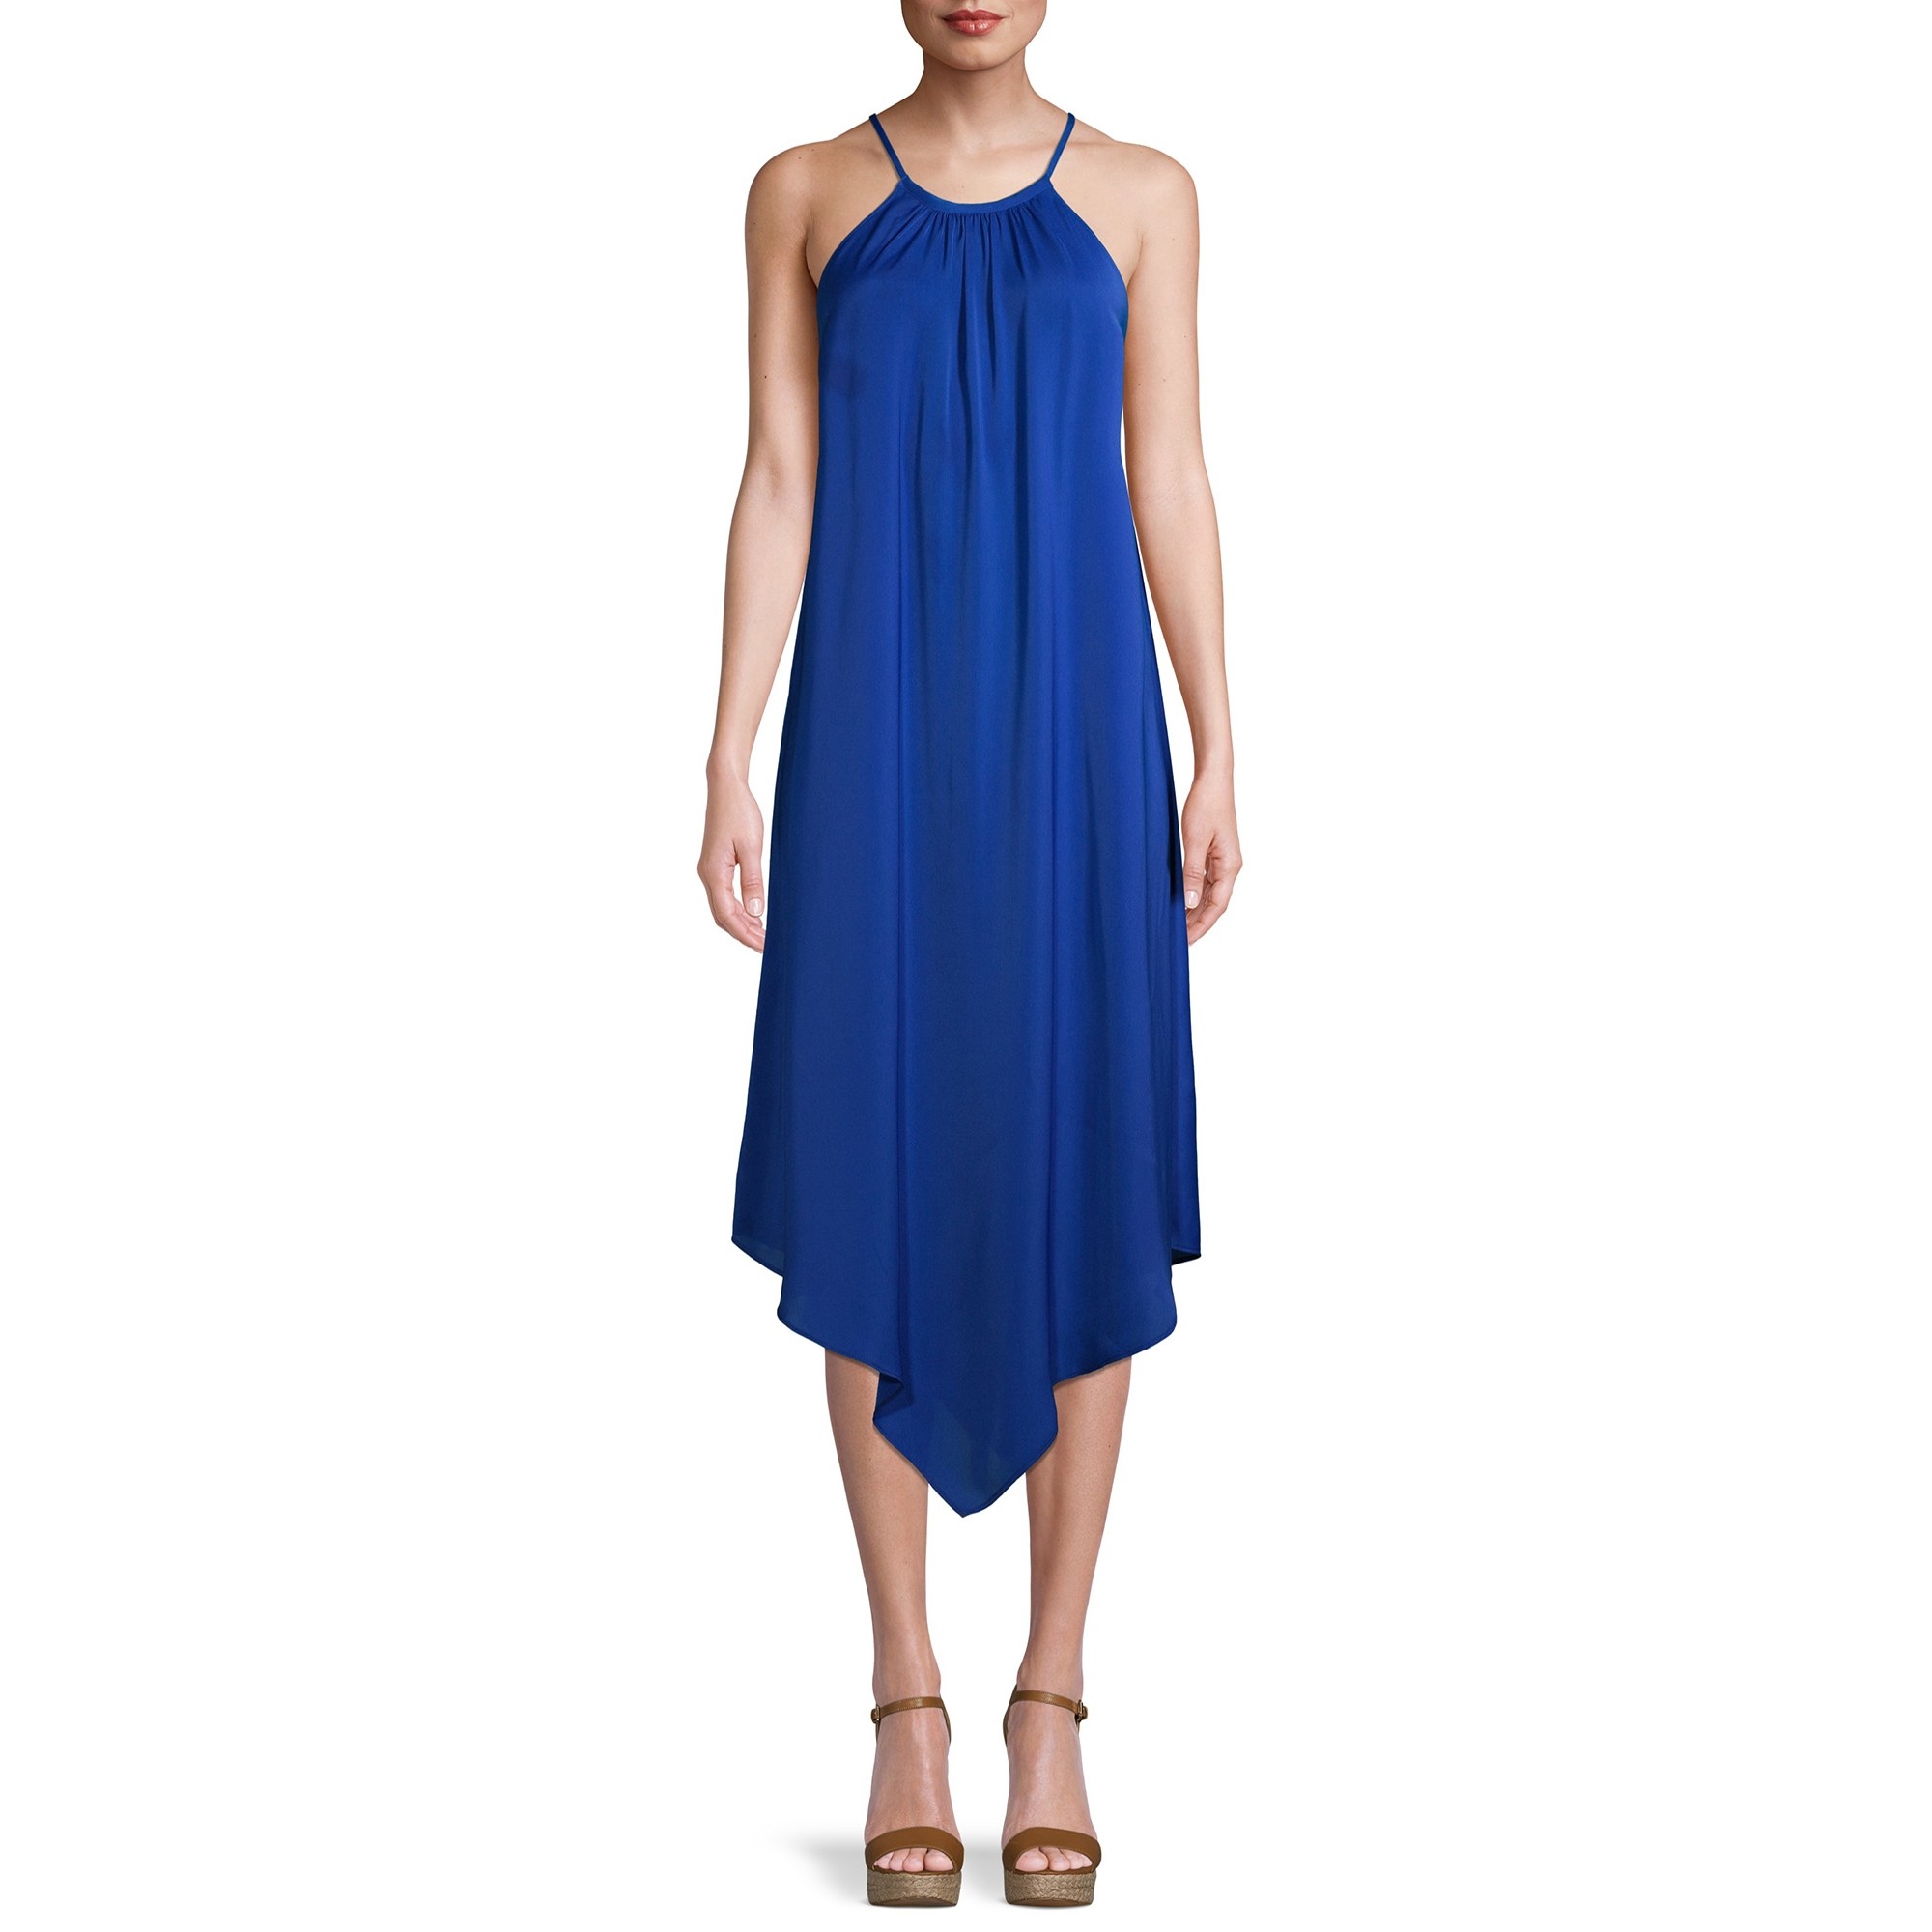 The blue halter midi dress with V-shaped hem